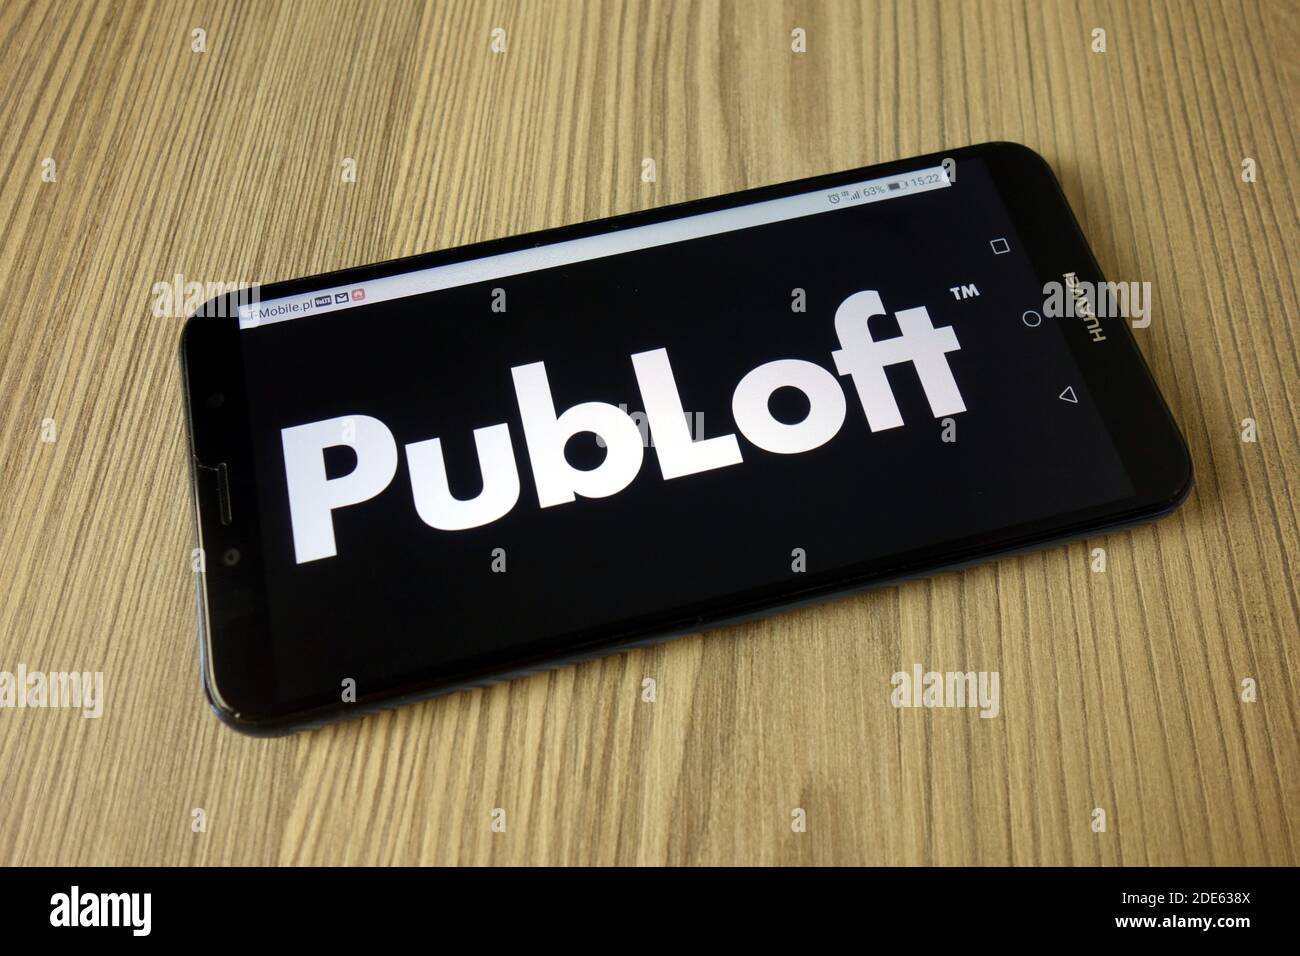 KONSKIE, POLAND - November 04, 2020: Publoft content marketing agency for startups logo on mobile phone Stock Photo